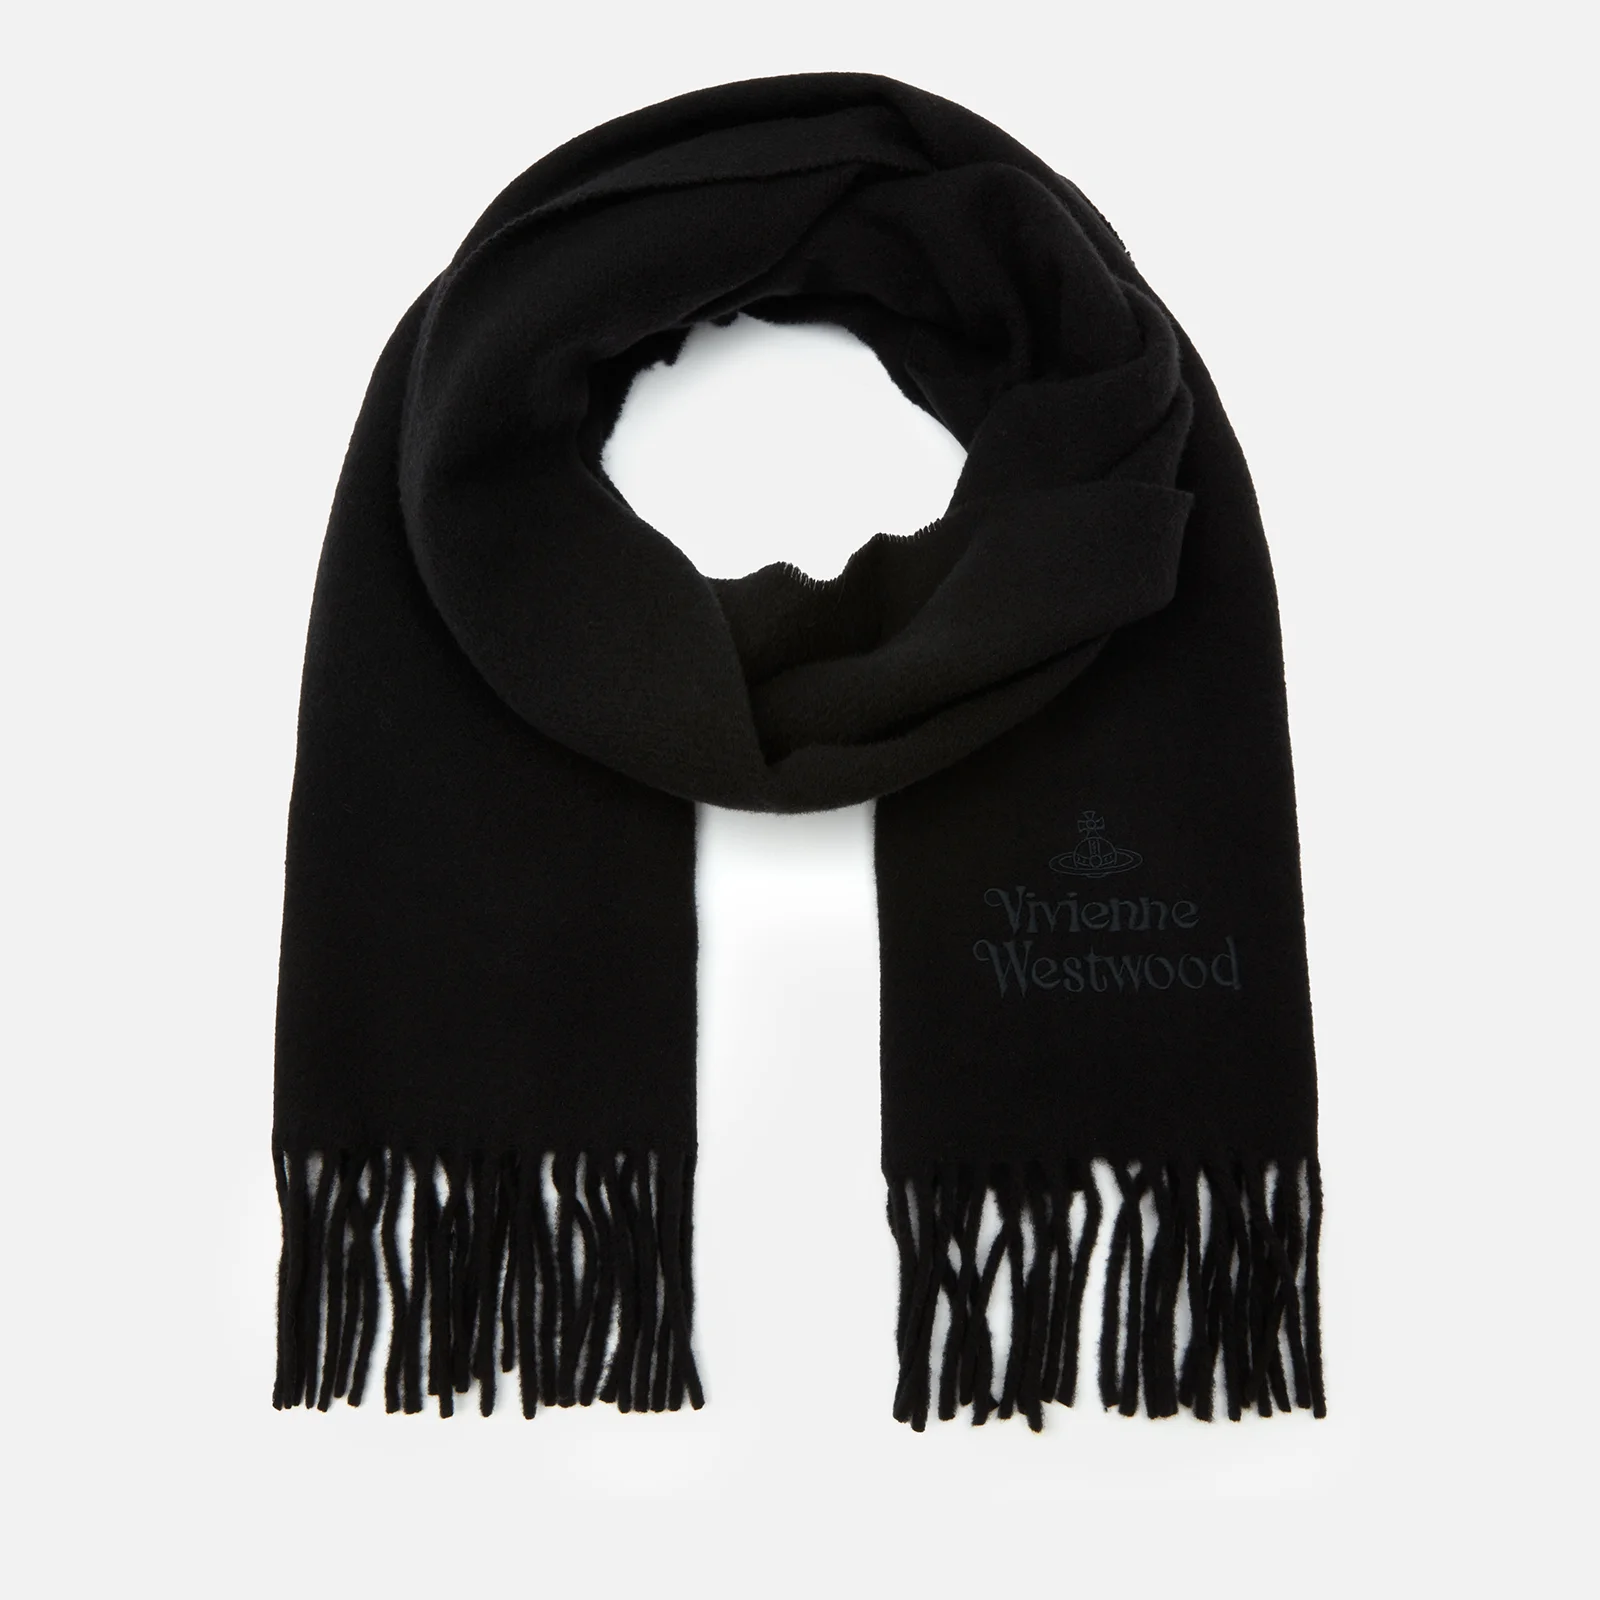 Vivienne Westwood Women's Embroidered Wool Scarf - Black Image 1